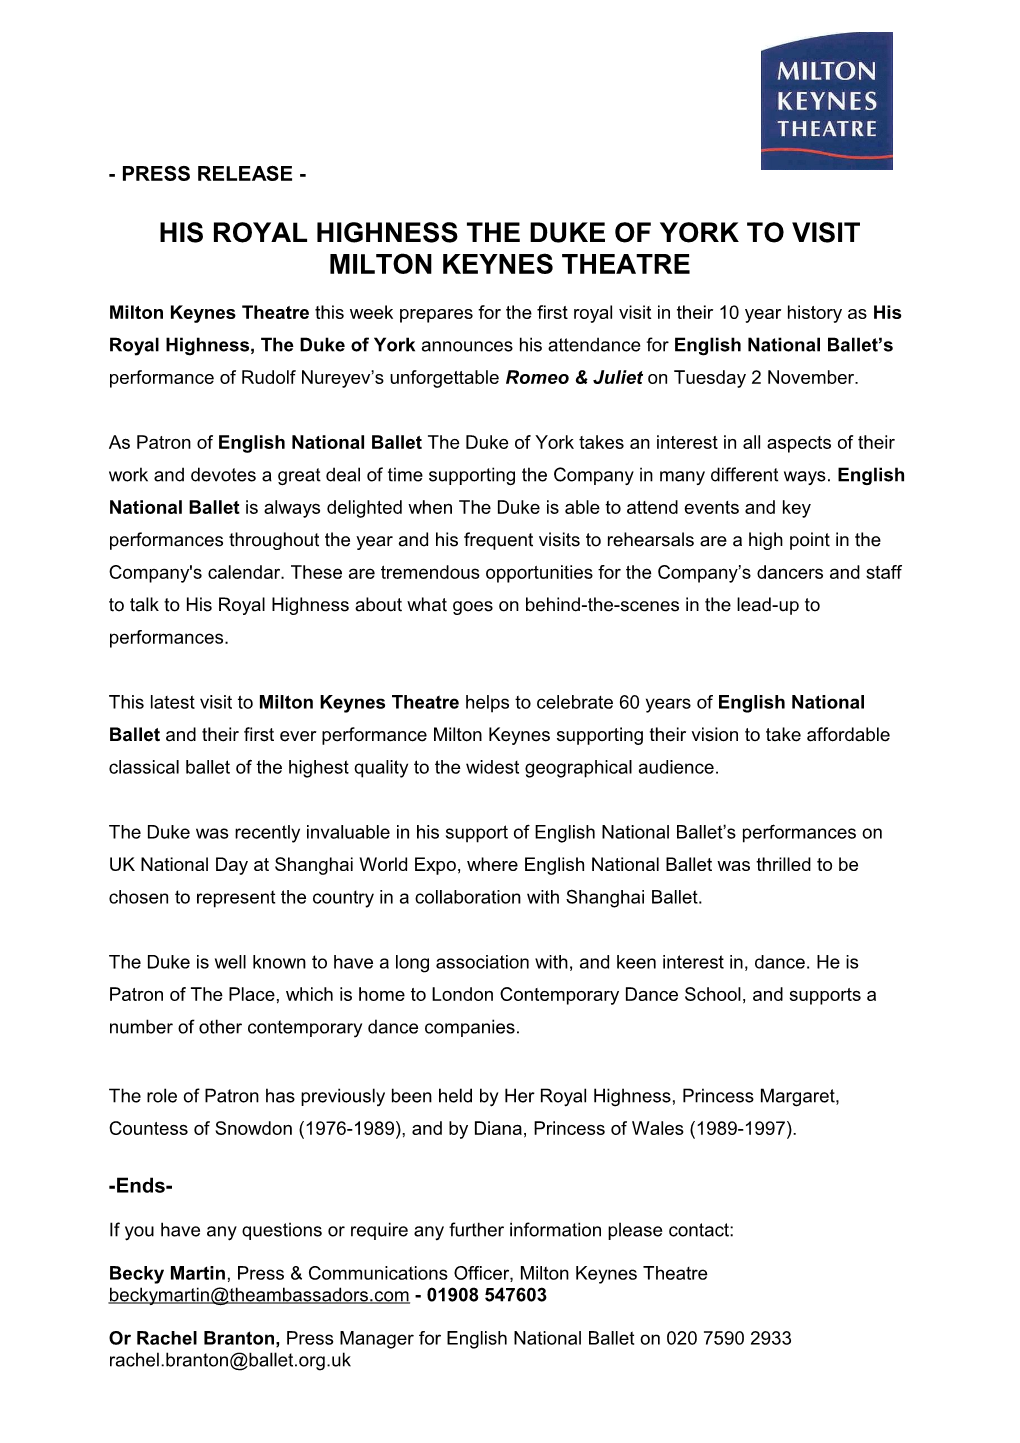 His Royal Highness the Duke of York to Visit Milton Keynes Theatre